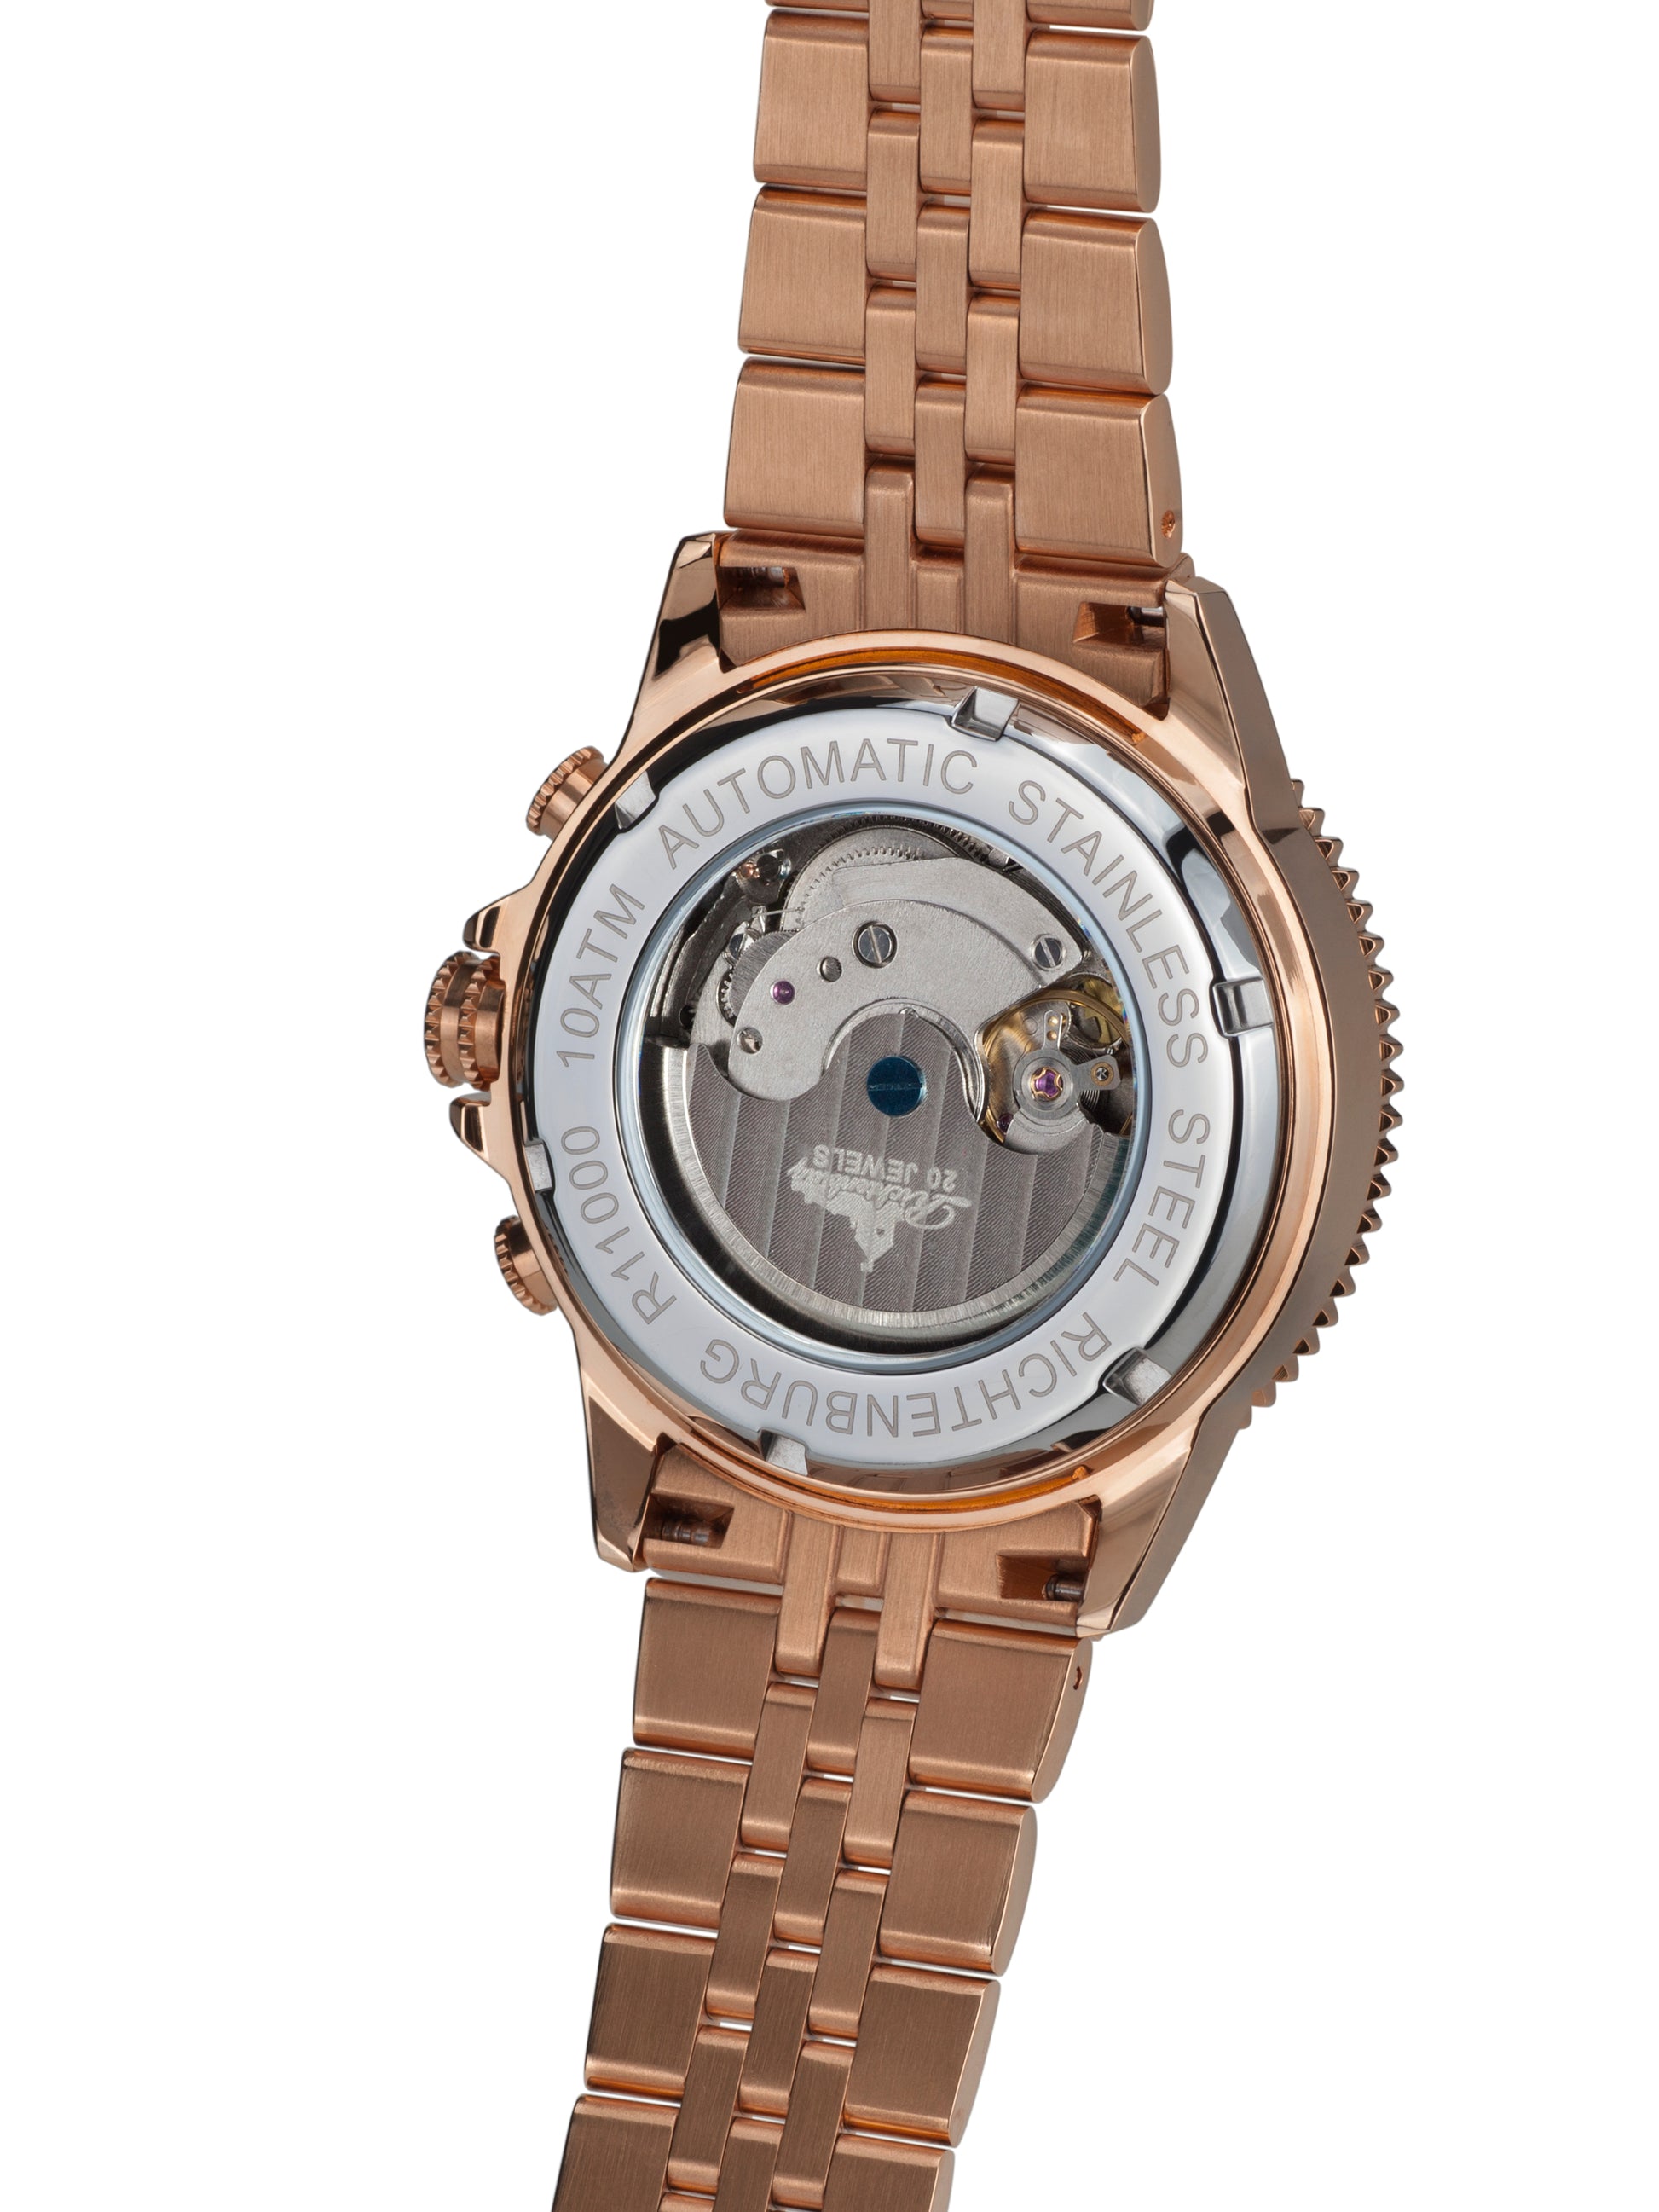 Automatic watches — Cassiopeia — Richtenburg — rosegold IP white